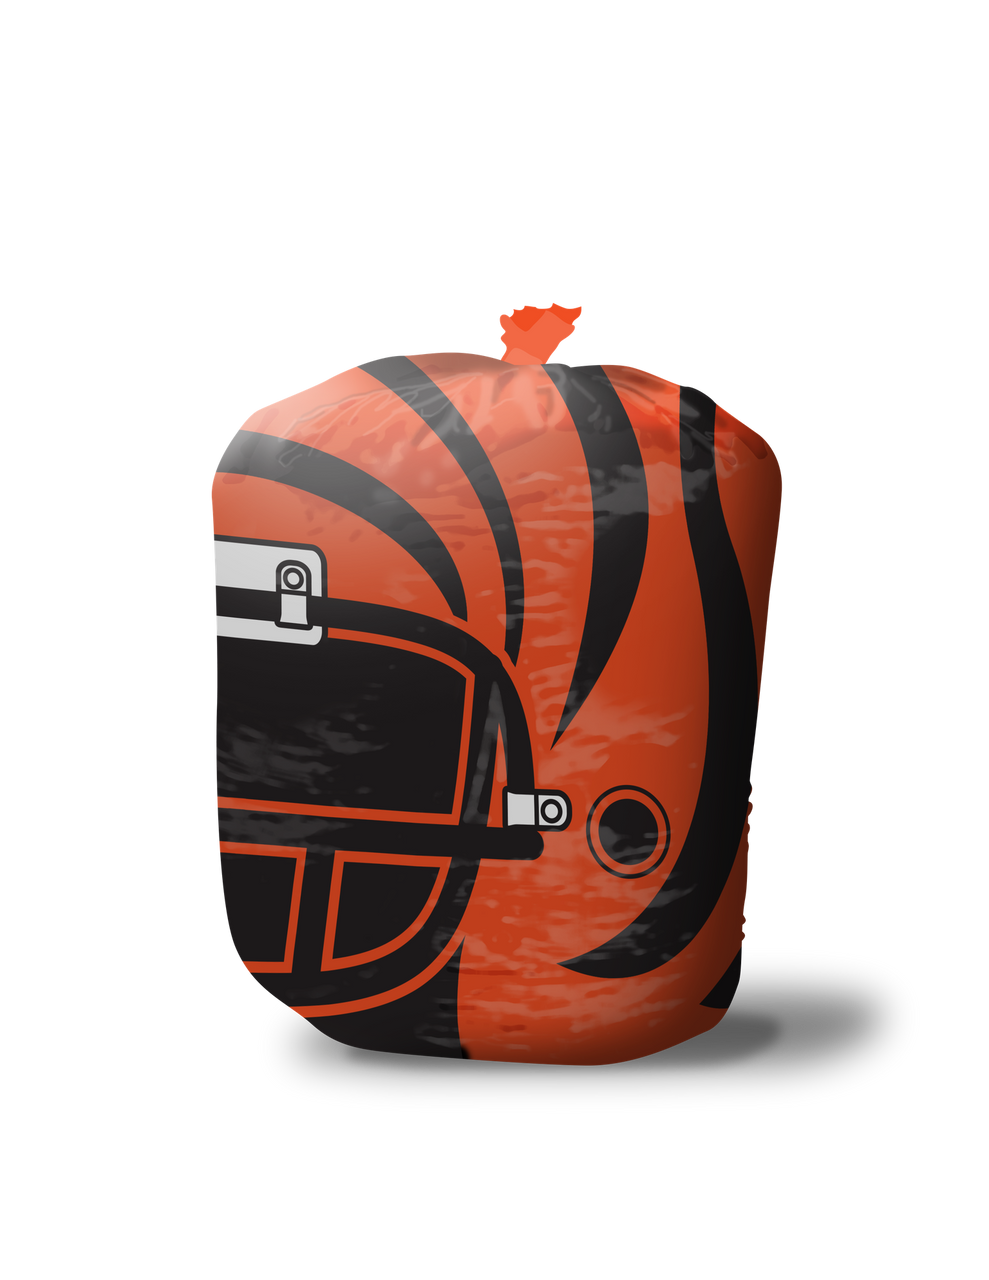 Cincinnati Bengals NFL Team Stuff-A-Helmet Lawn and Leaf Bags